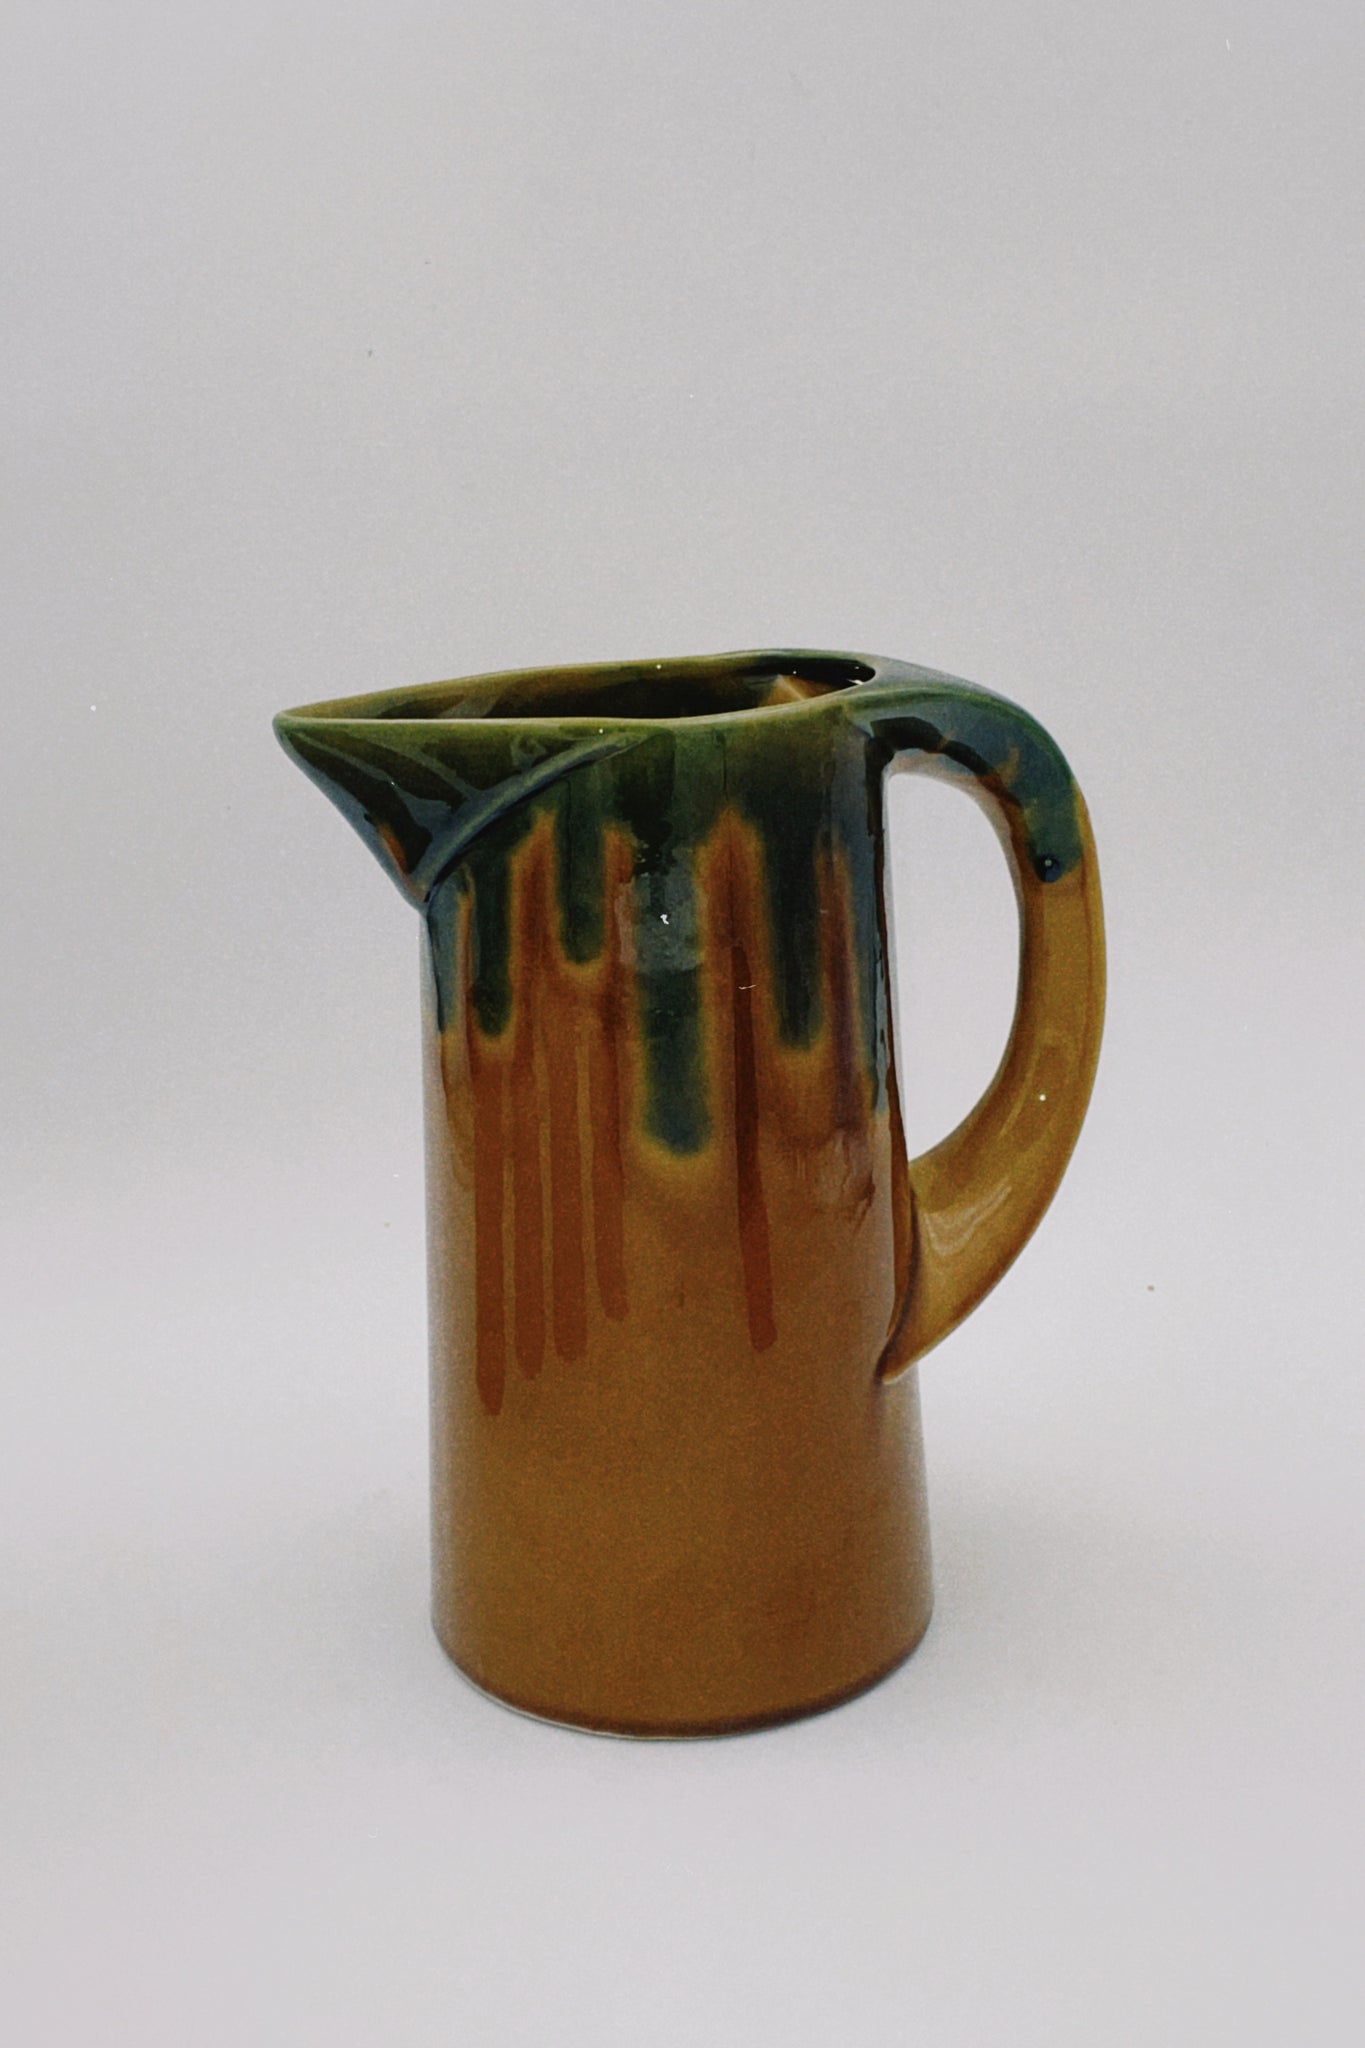 Glazed Ceramic Set of Mugs and Carafe